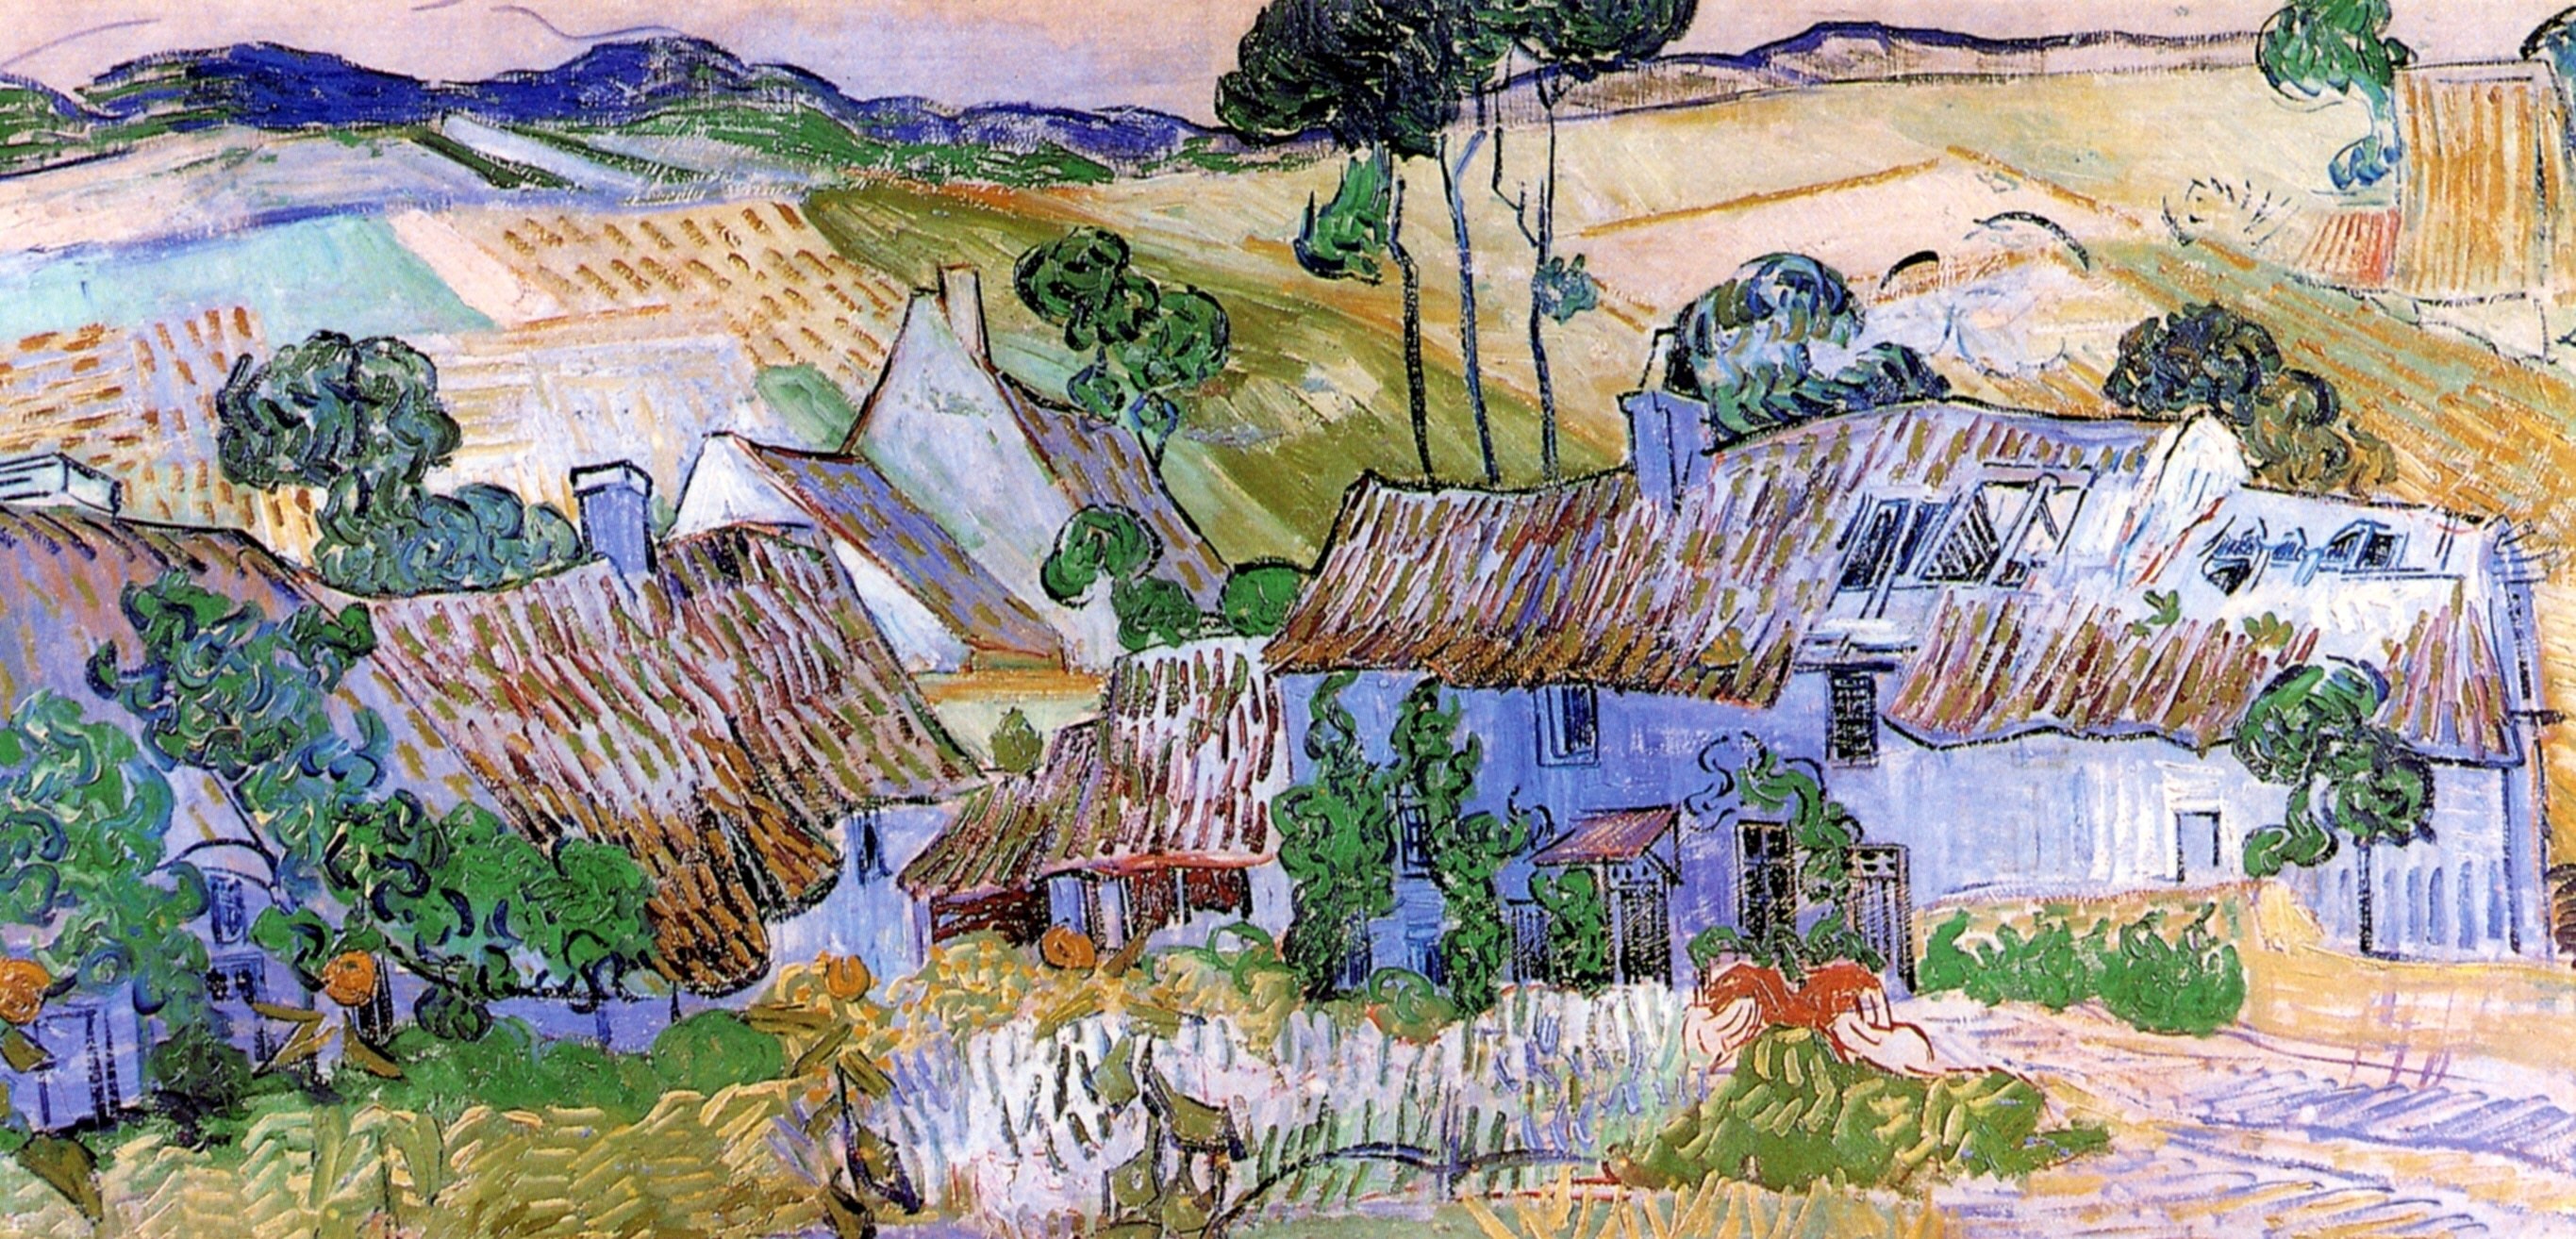 Artwork Painting Classic Art Vincent Van Gogh 2731x1314